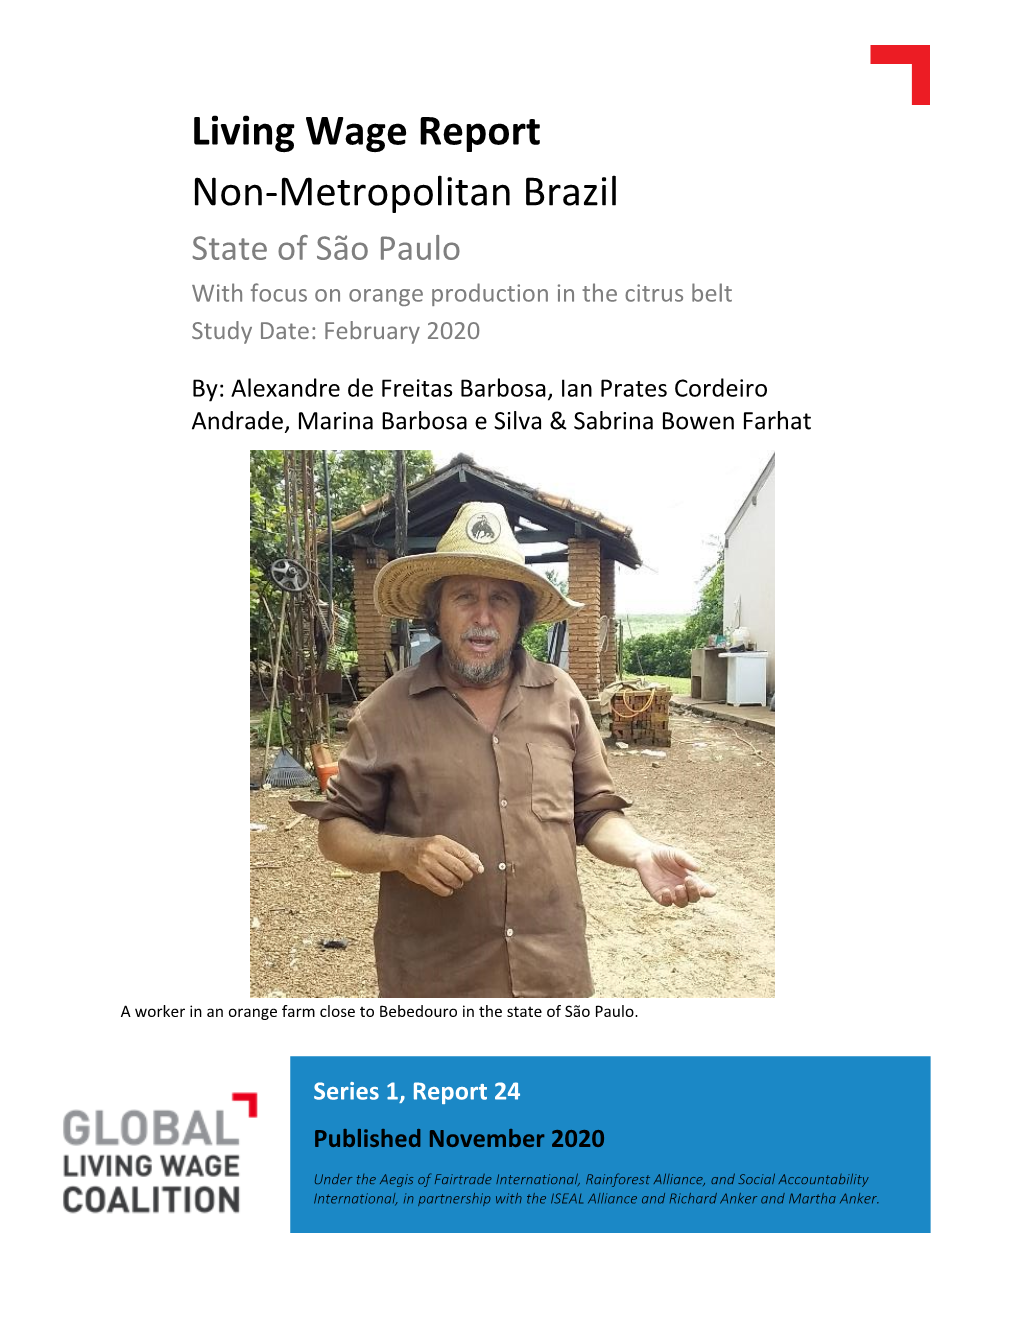 Living Wage Report Non-Metropolitan Brazil State of São Paulo